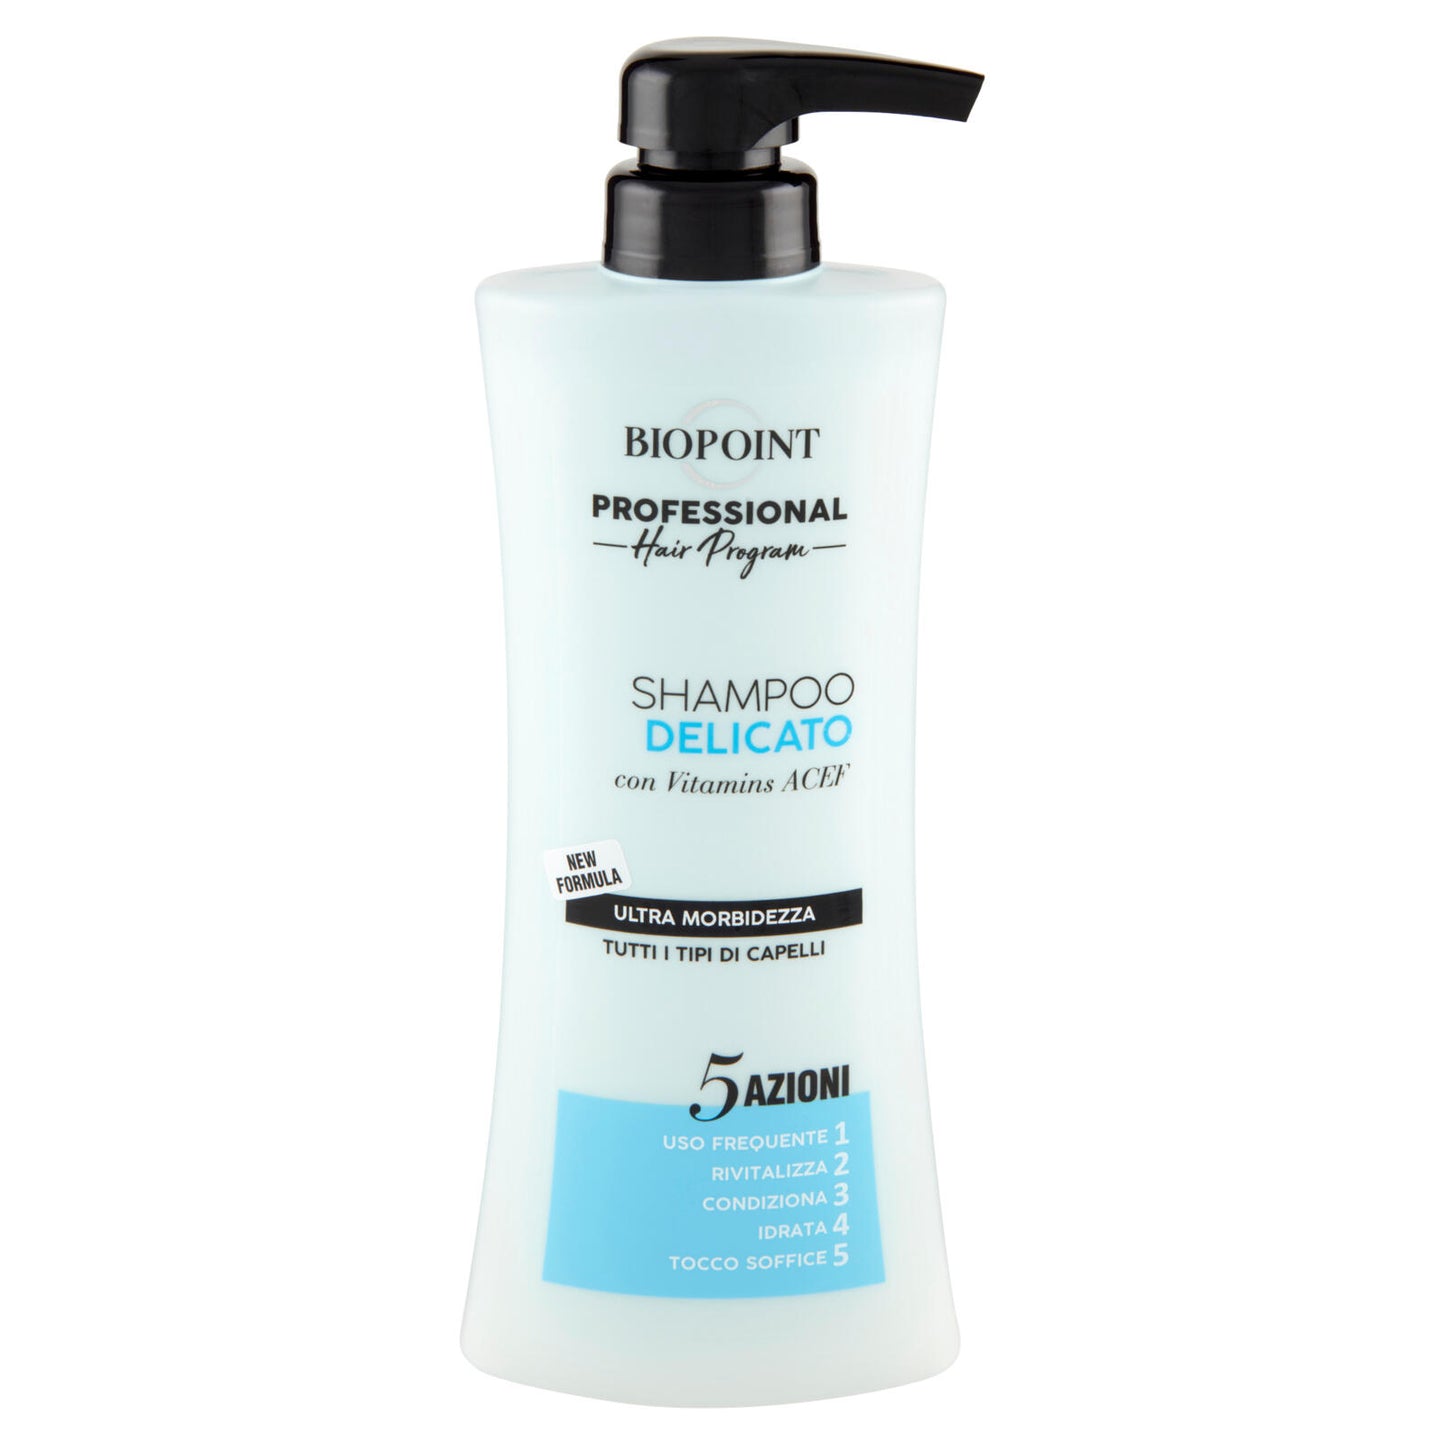 Biopoint Professional Hair Program Shampoo Delicato 400 ml